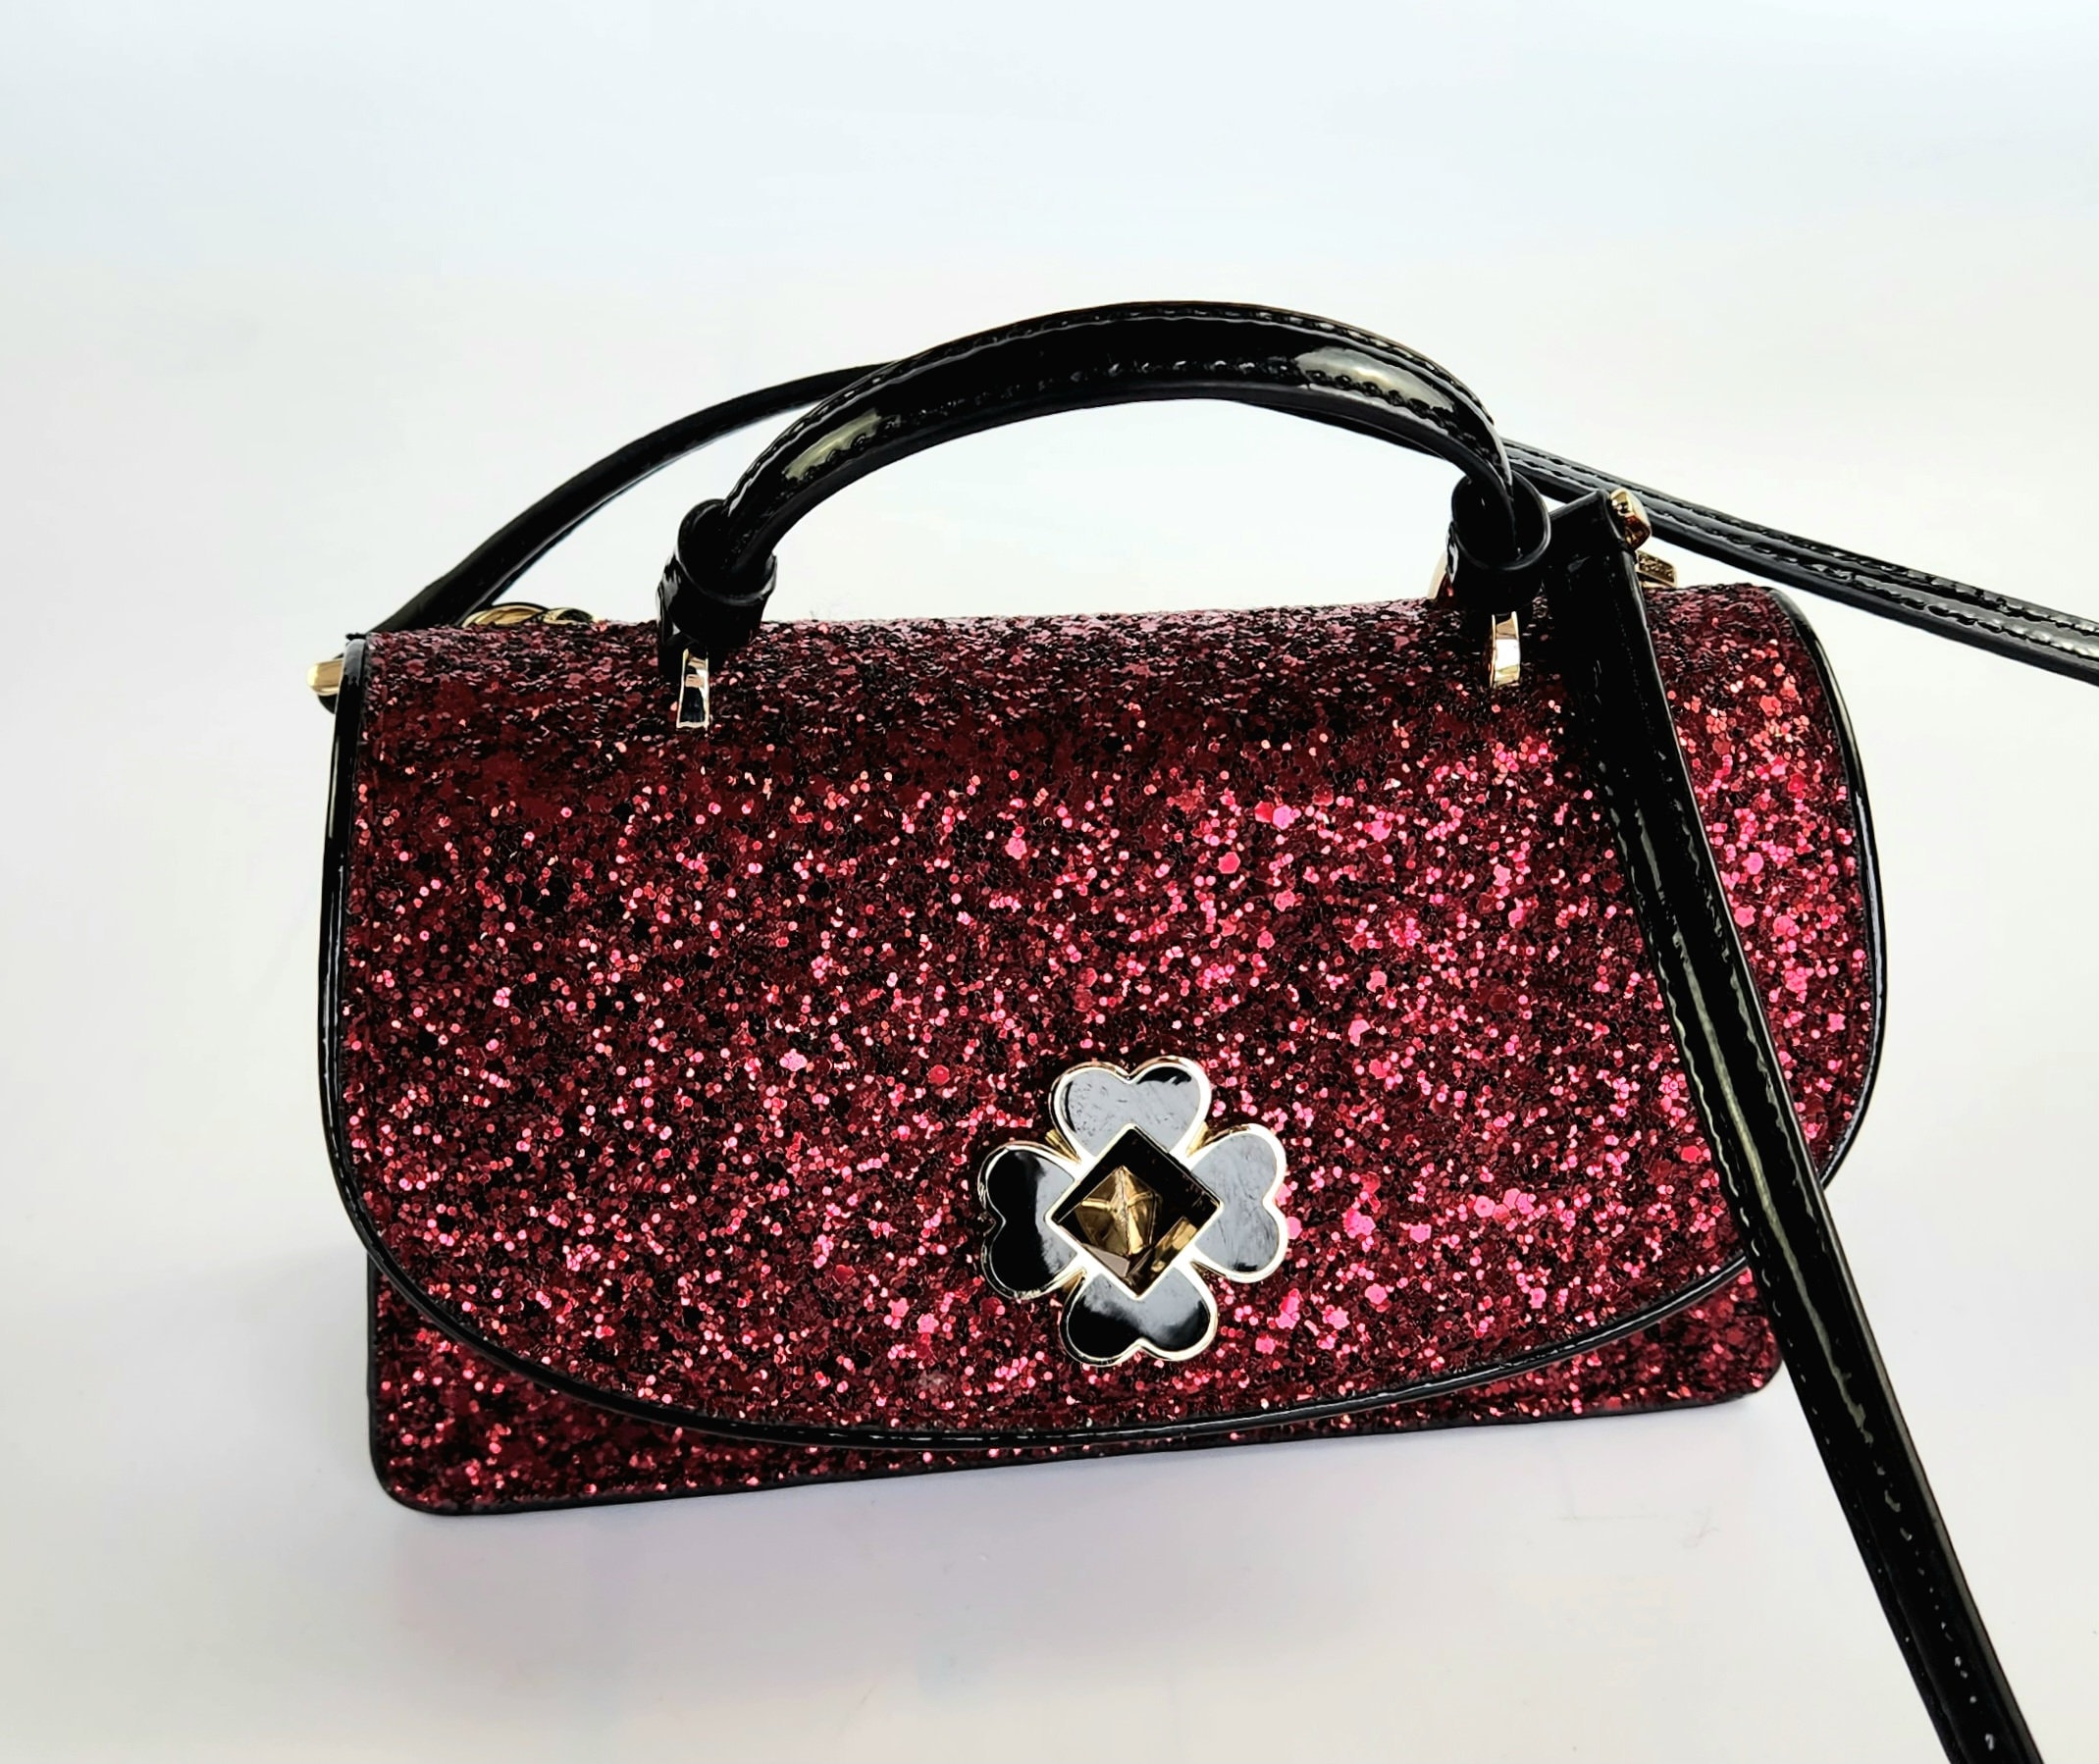  Women's Crossbody Handbags - Kate Spade New York